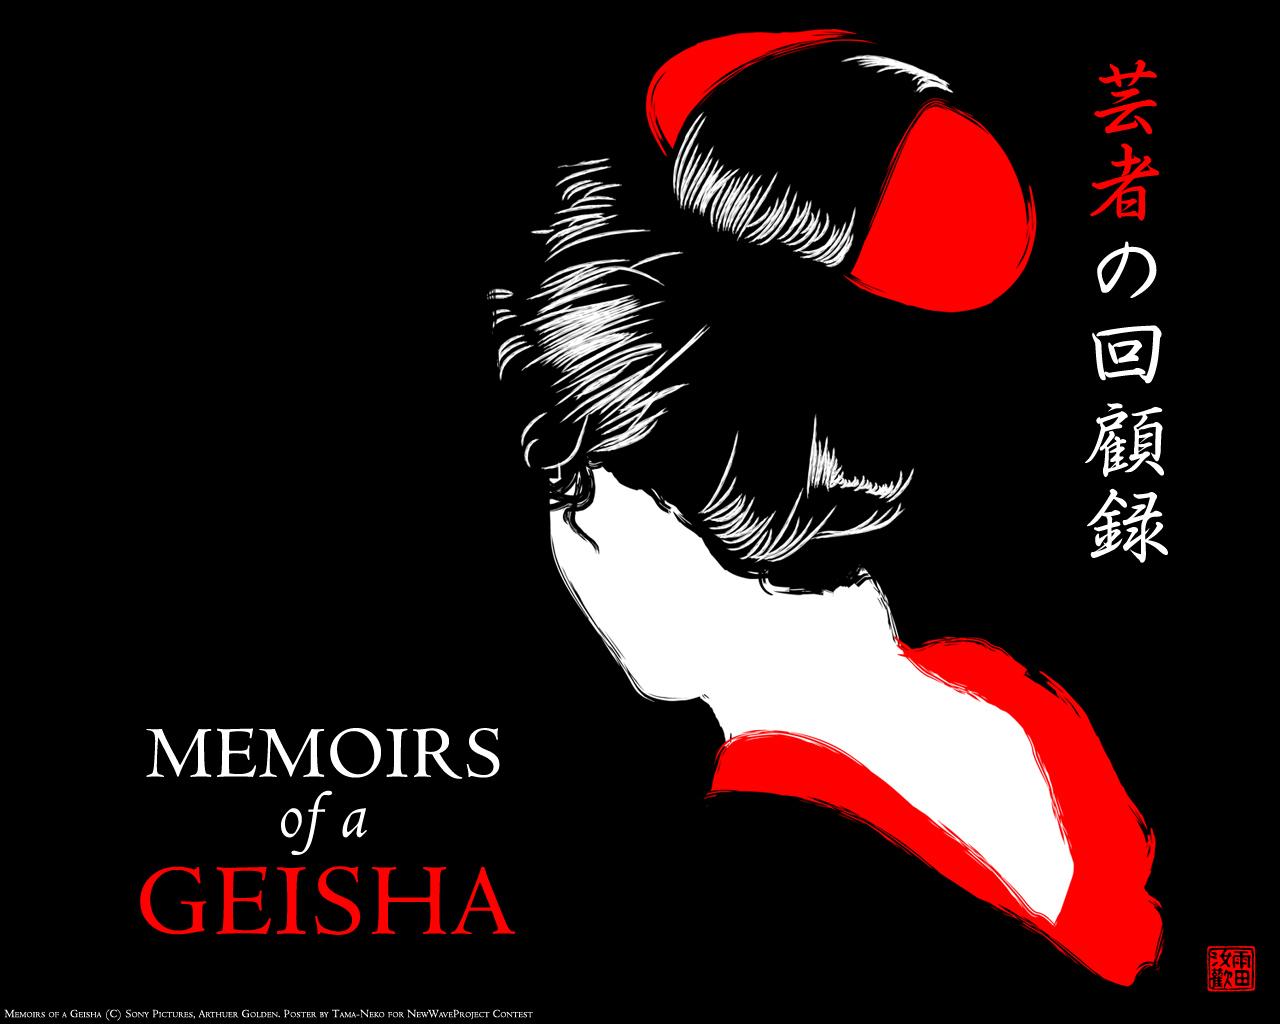 Постер - Мемуары гейши: 1280x1024 / 78.2 Кб